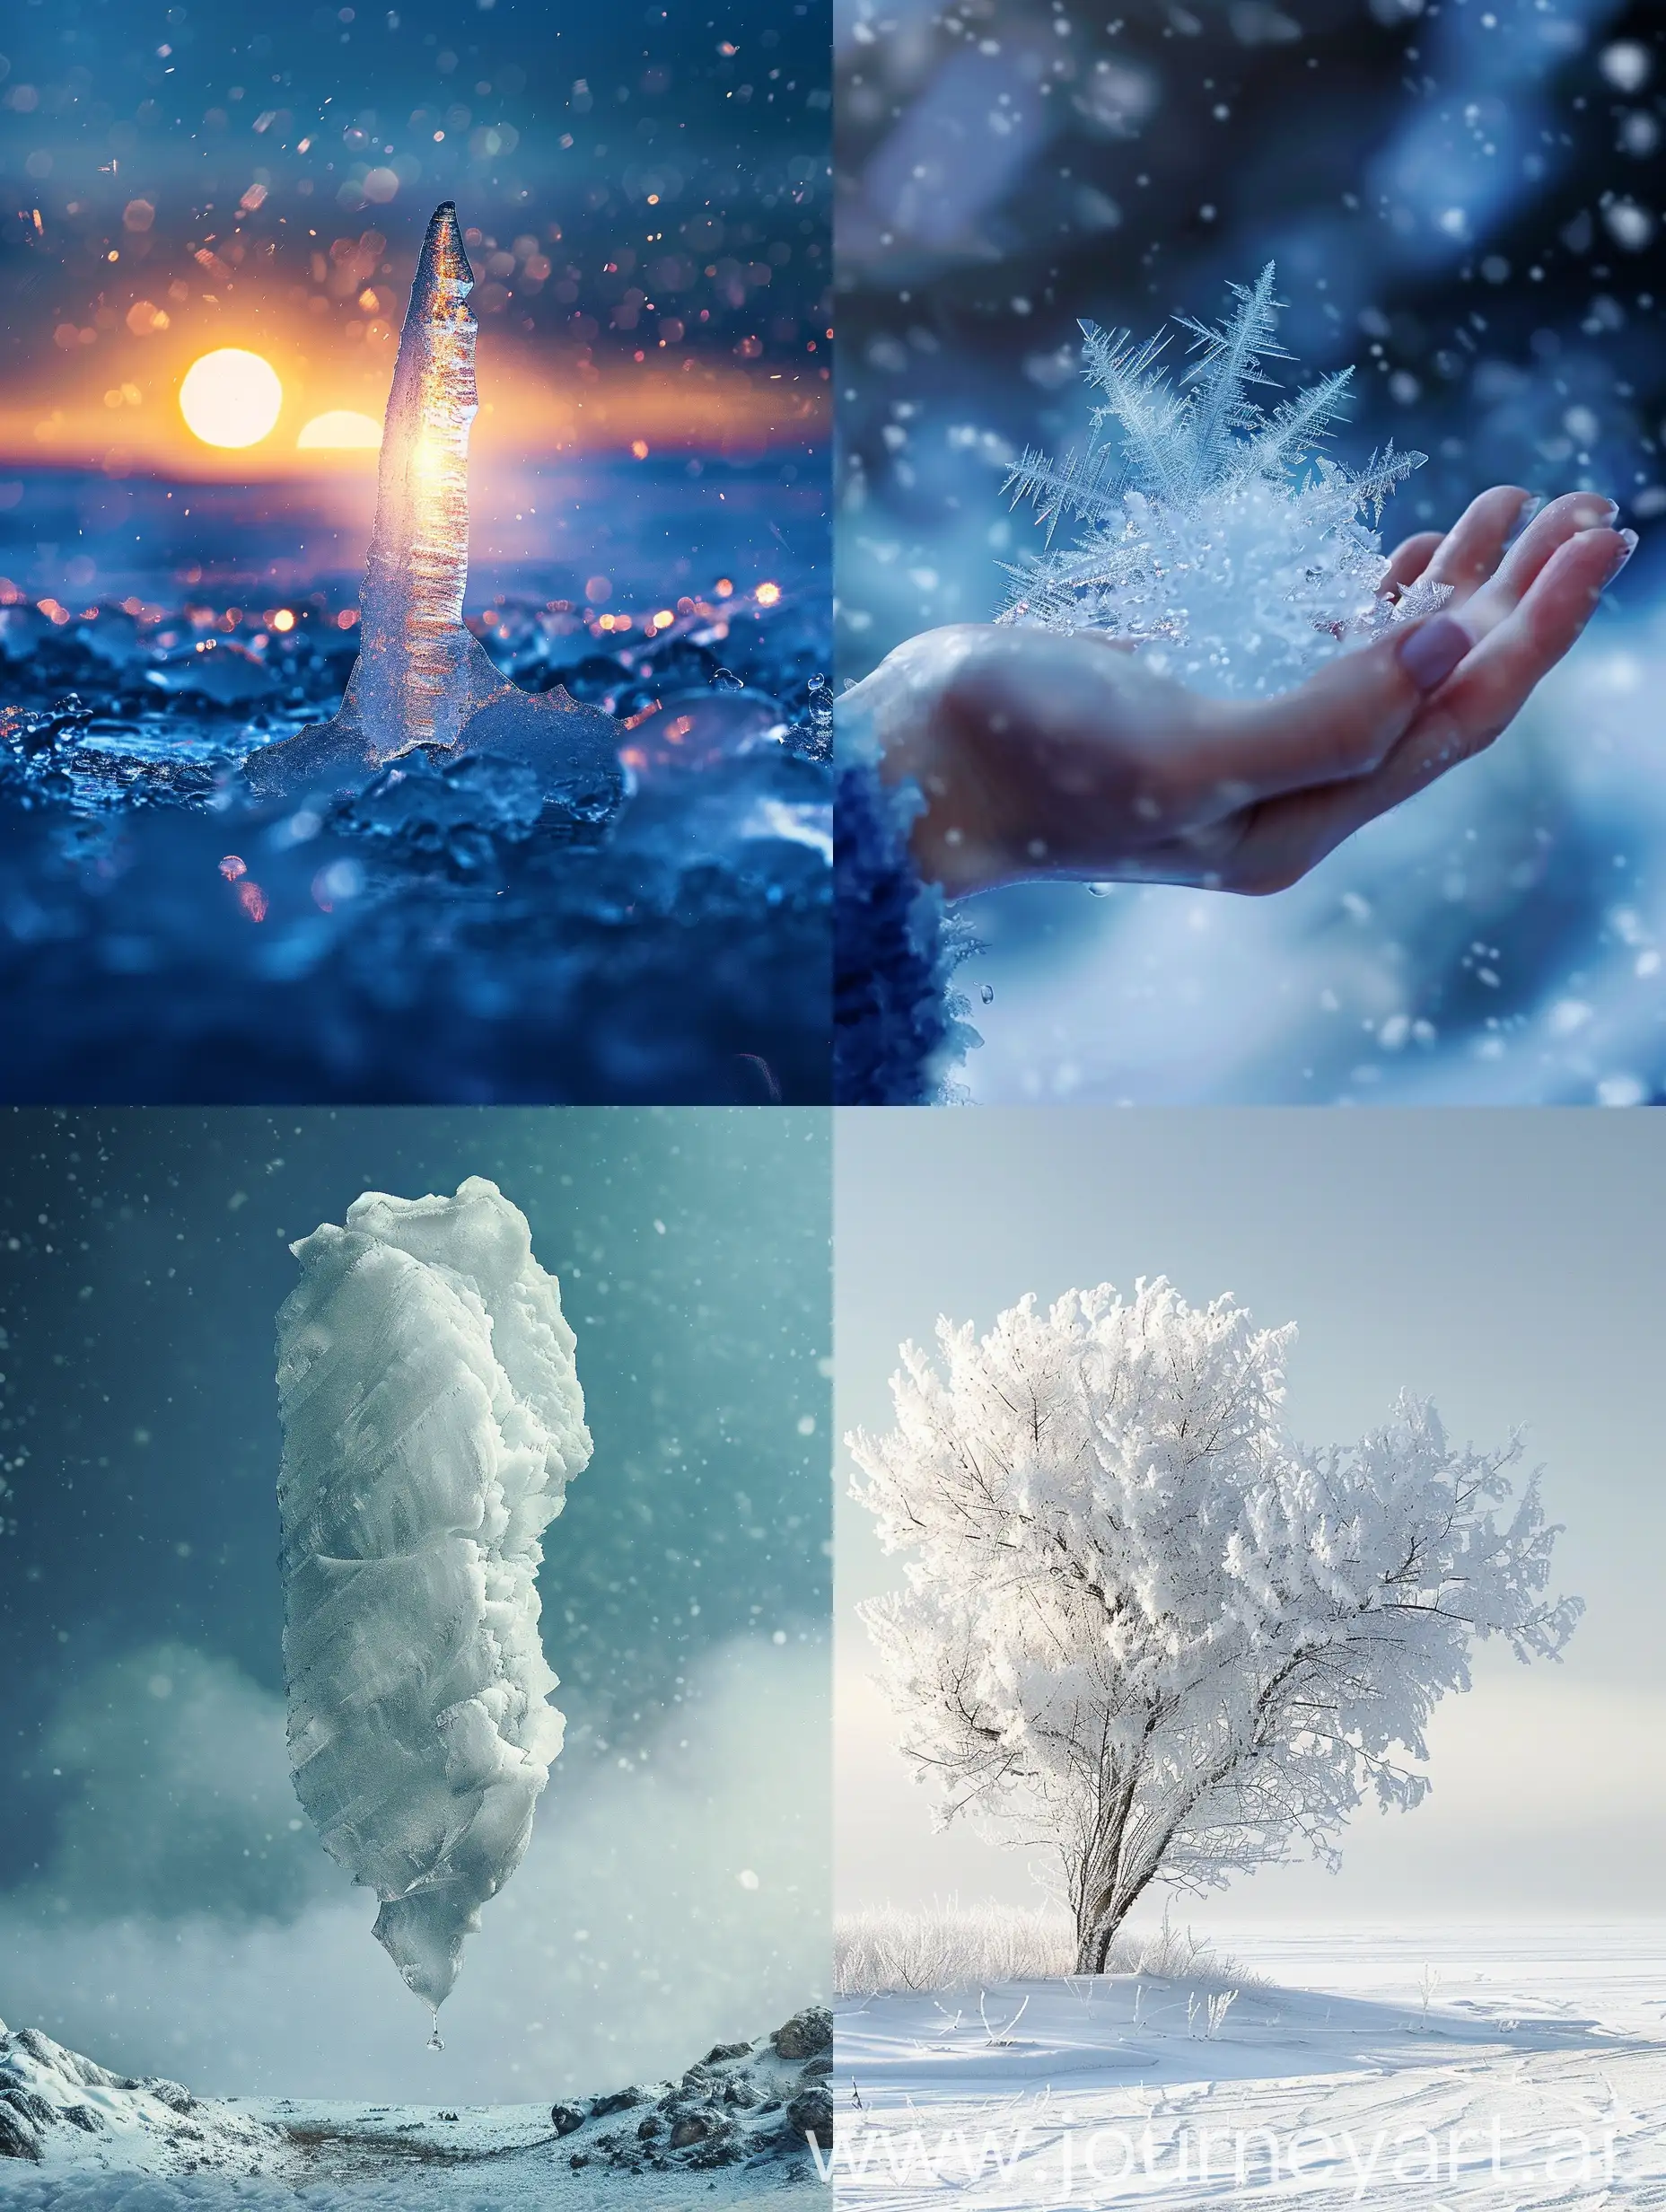 Magical-Winter-Scene-A-Frozen-Wish